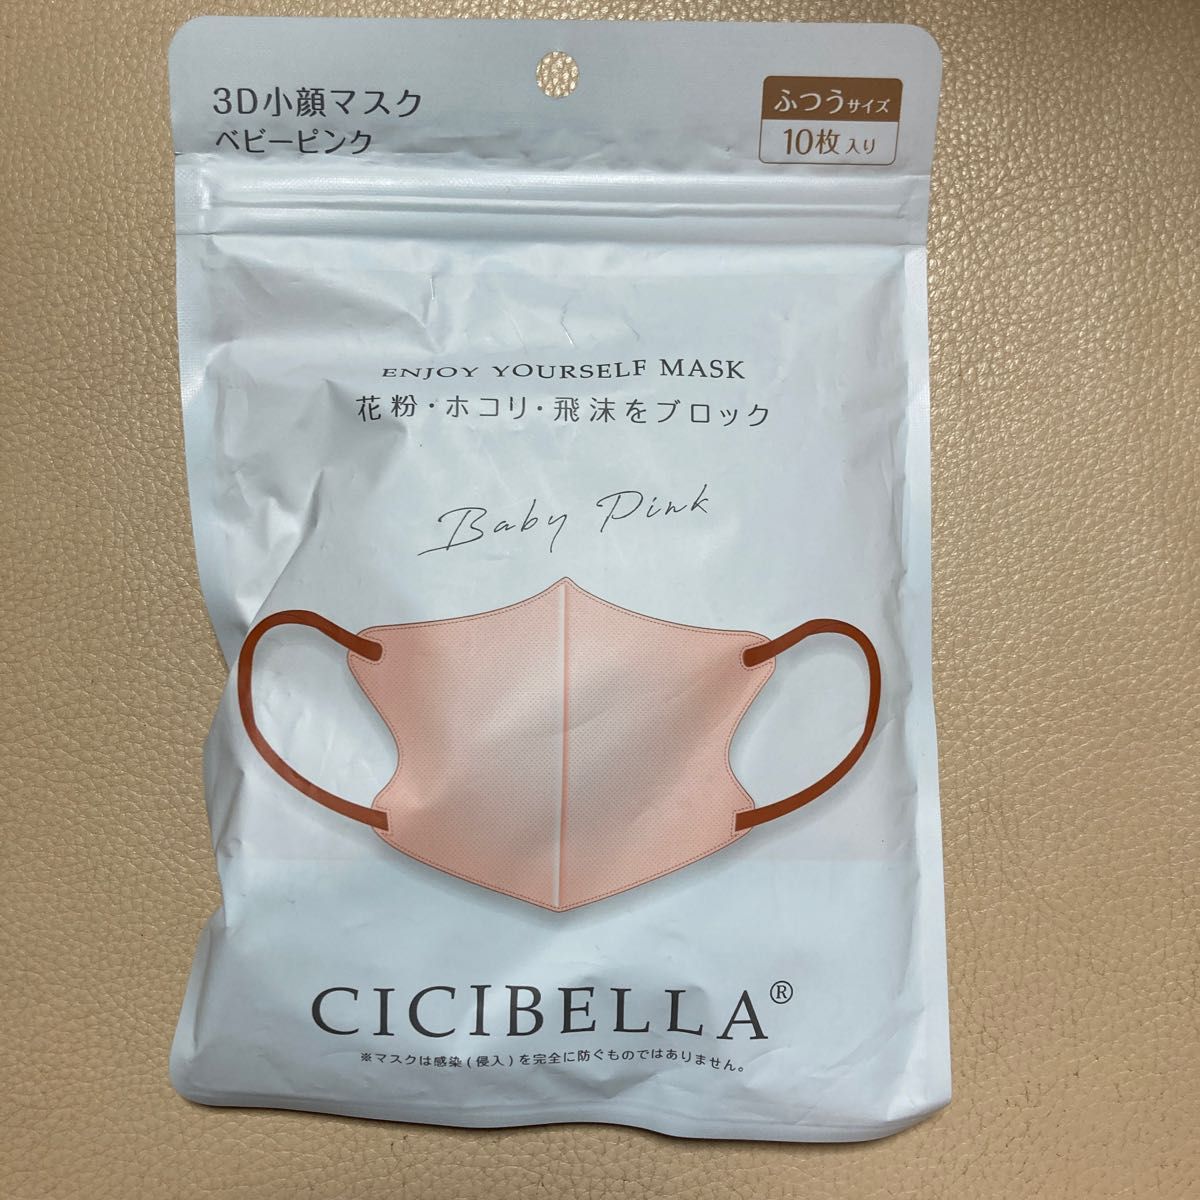 CICIBELLA 3Dマスク Cタイプ ふつうサイズ ベビーピンク × 紐オールドローズ 10枚入